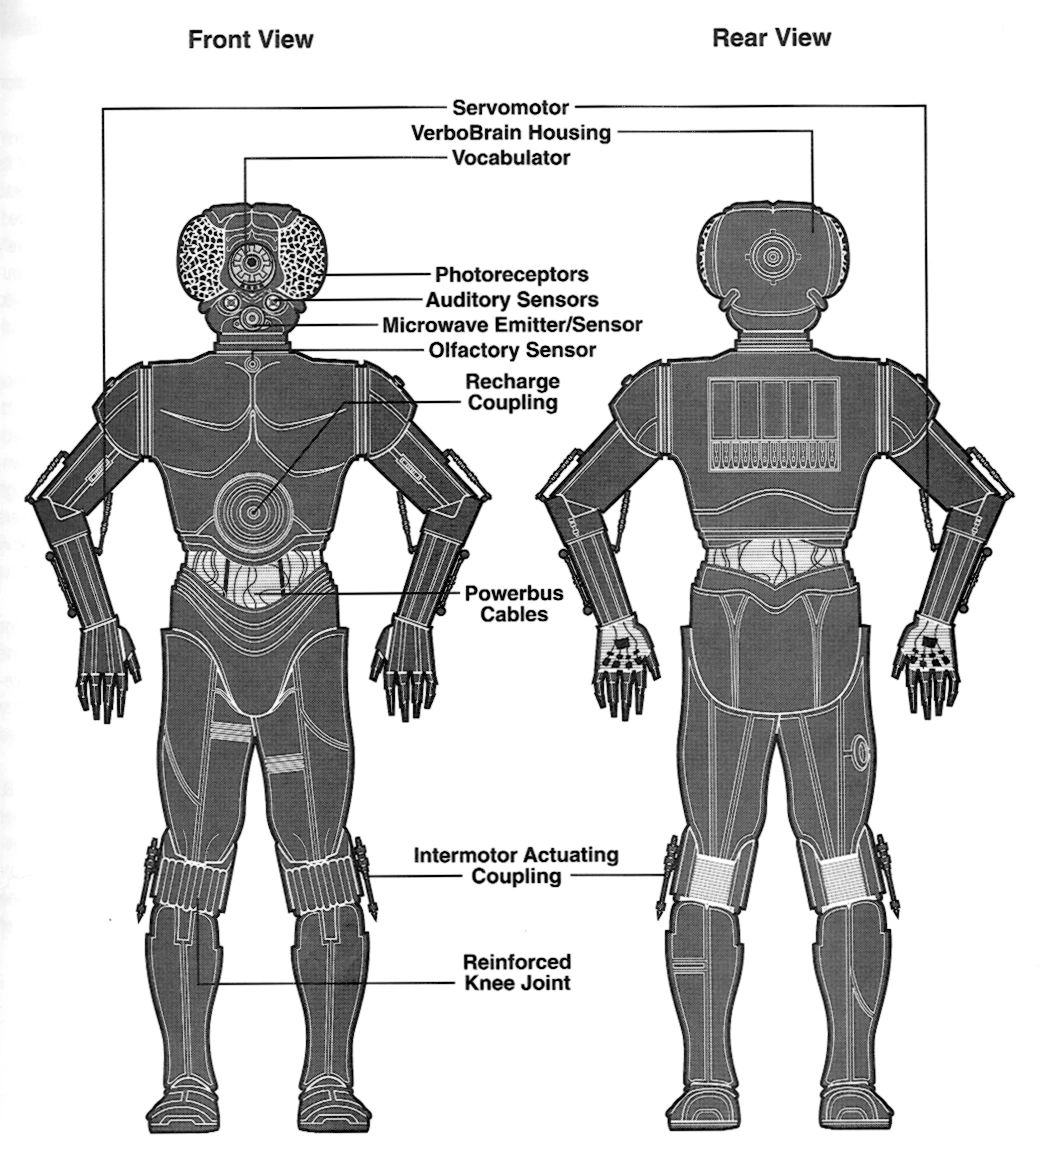 Industrial Automaton LOM-series protocol droid